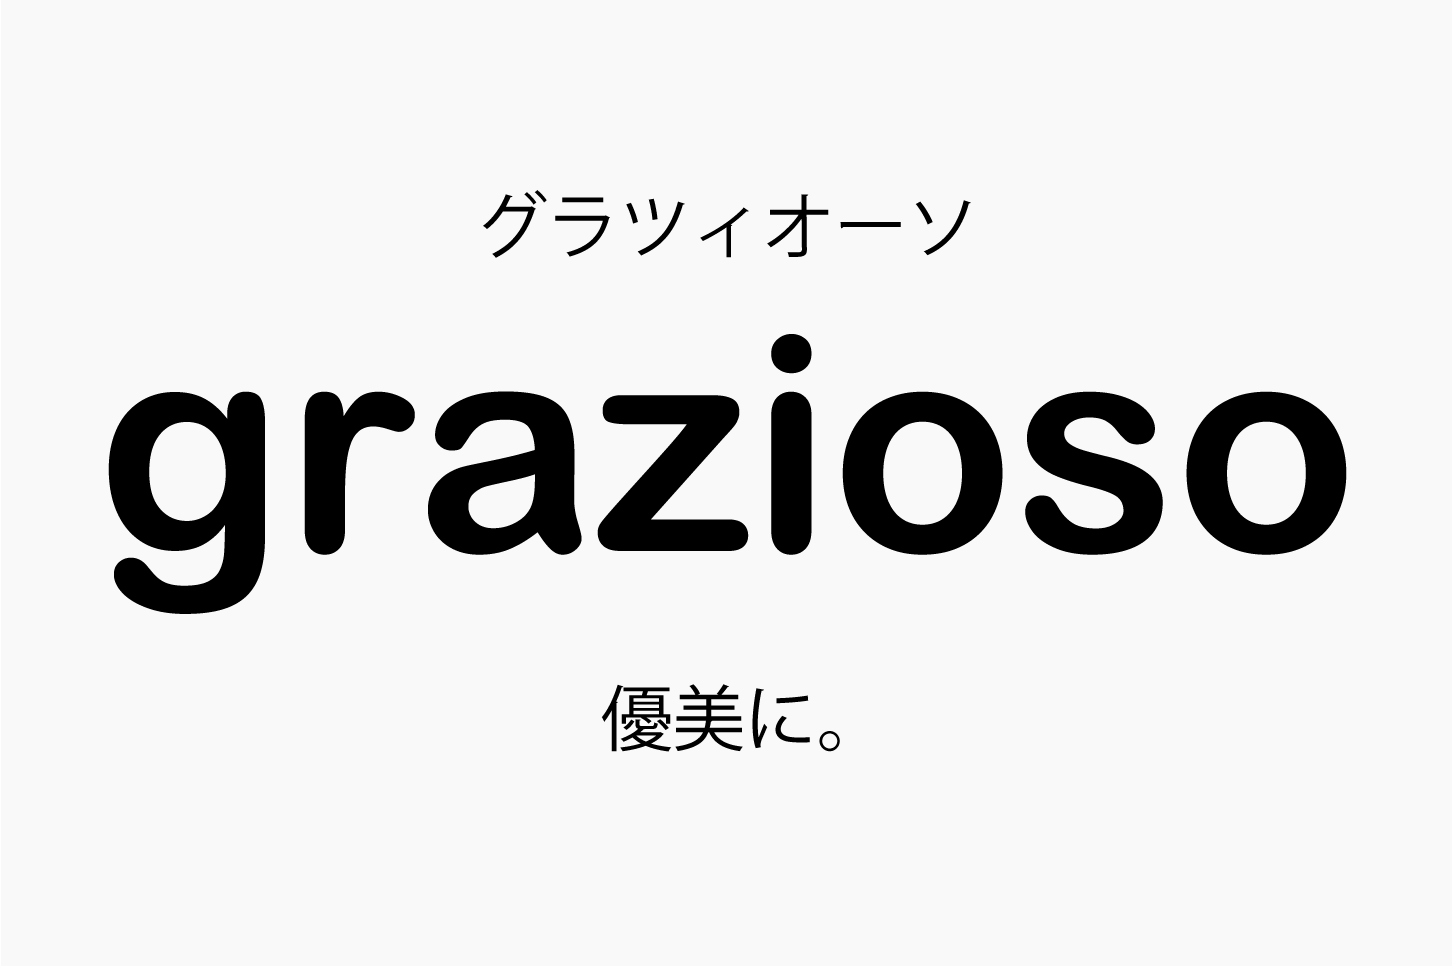 Grazioso グラツィオーソ の意味 音楽用語辞典